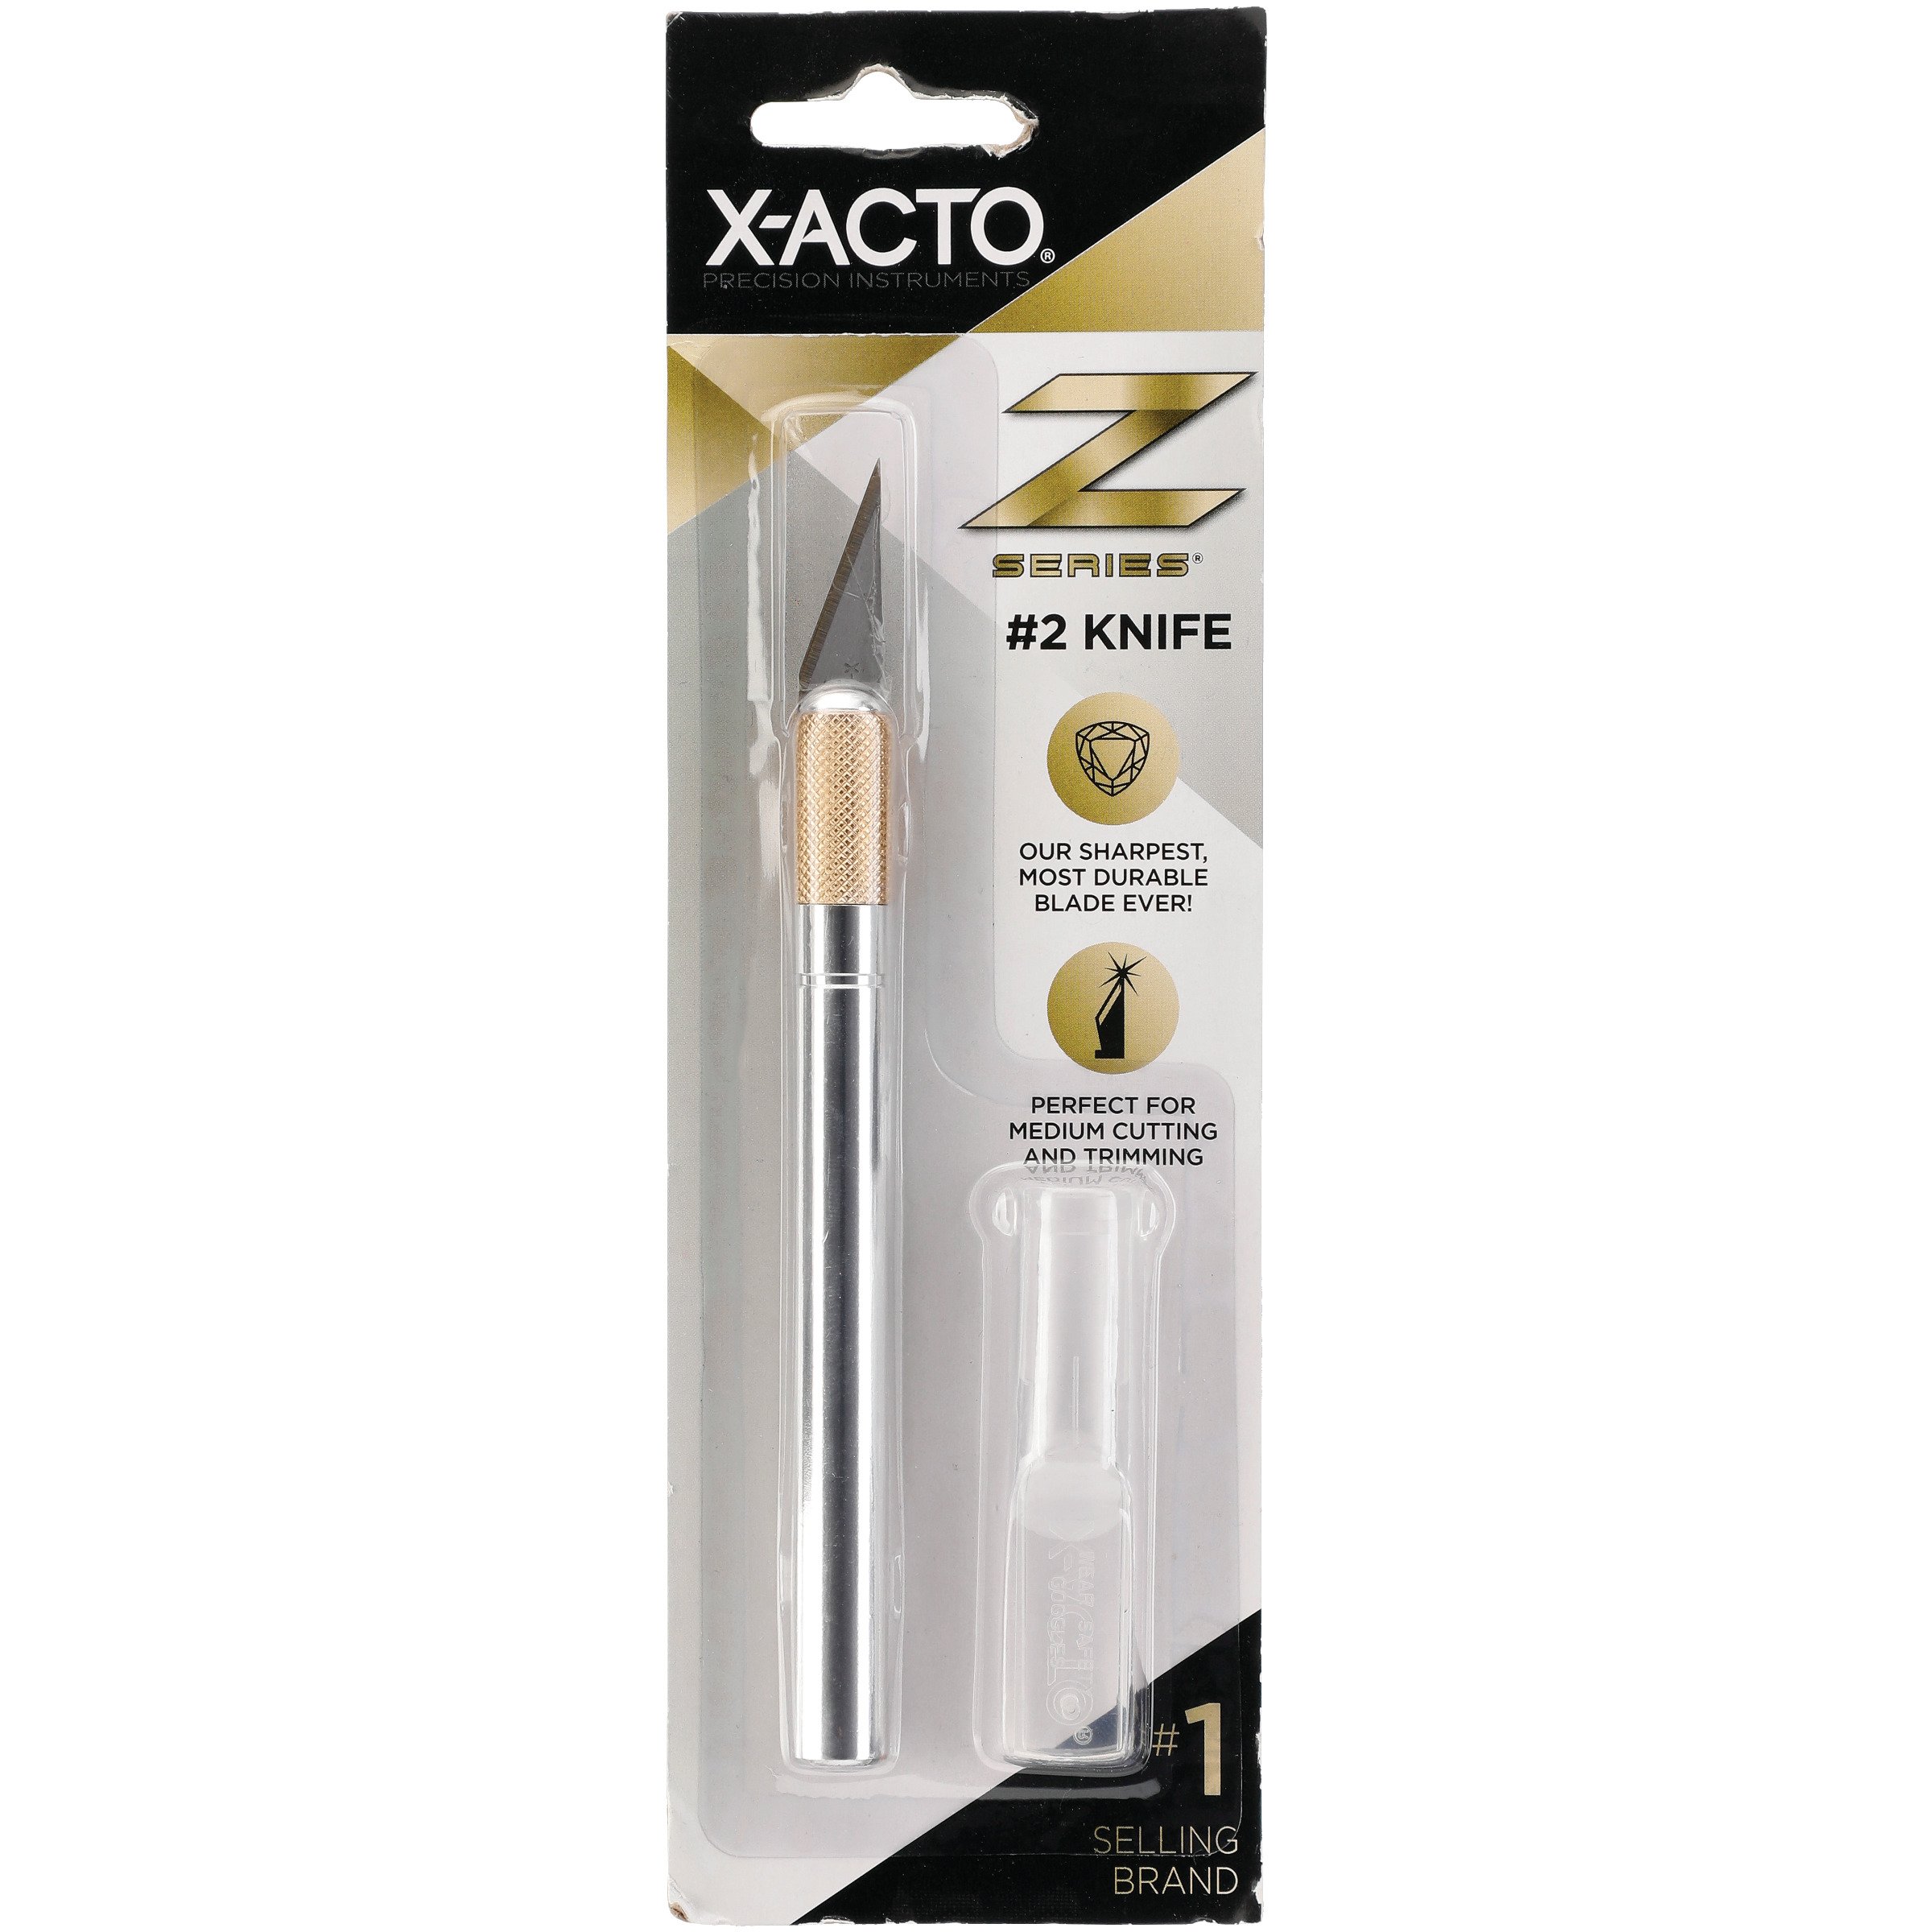 X-Acto knife